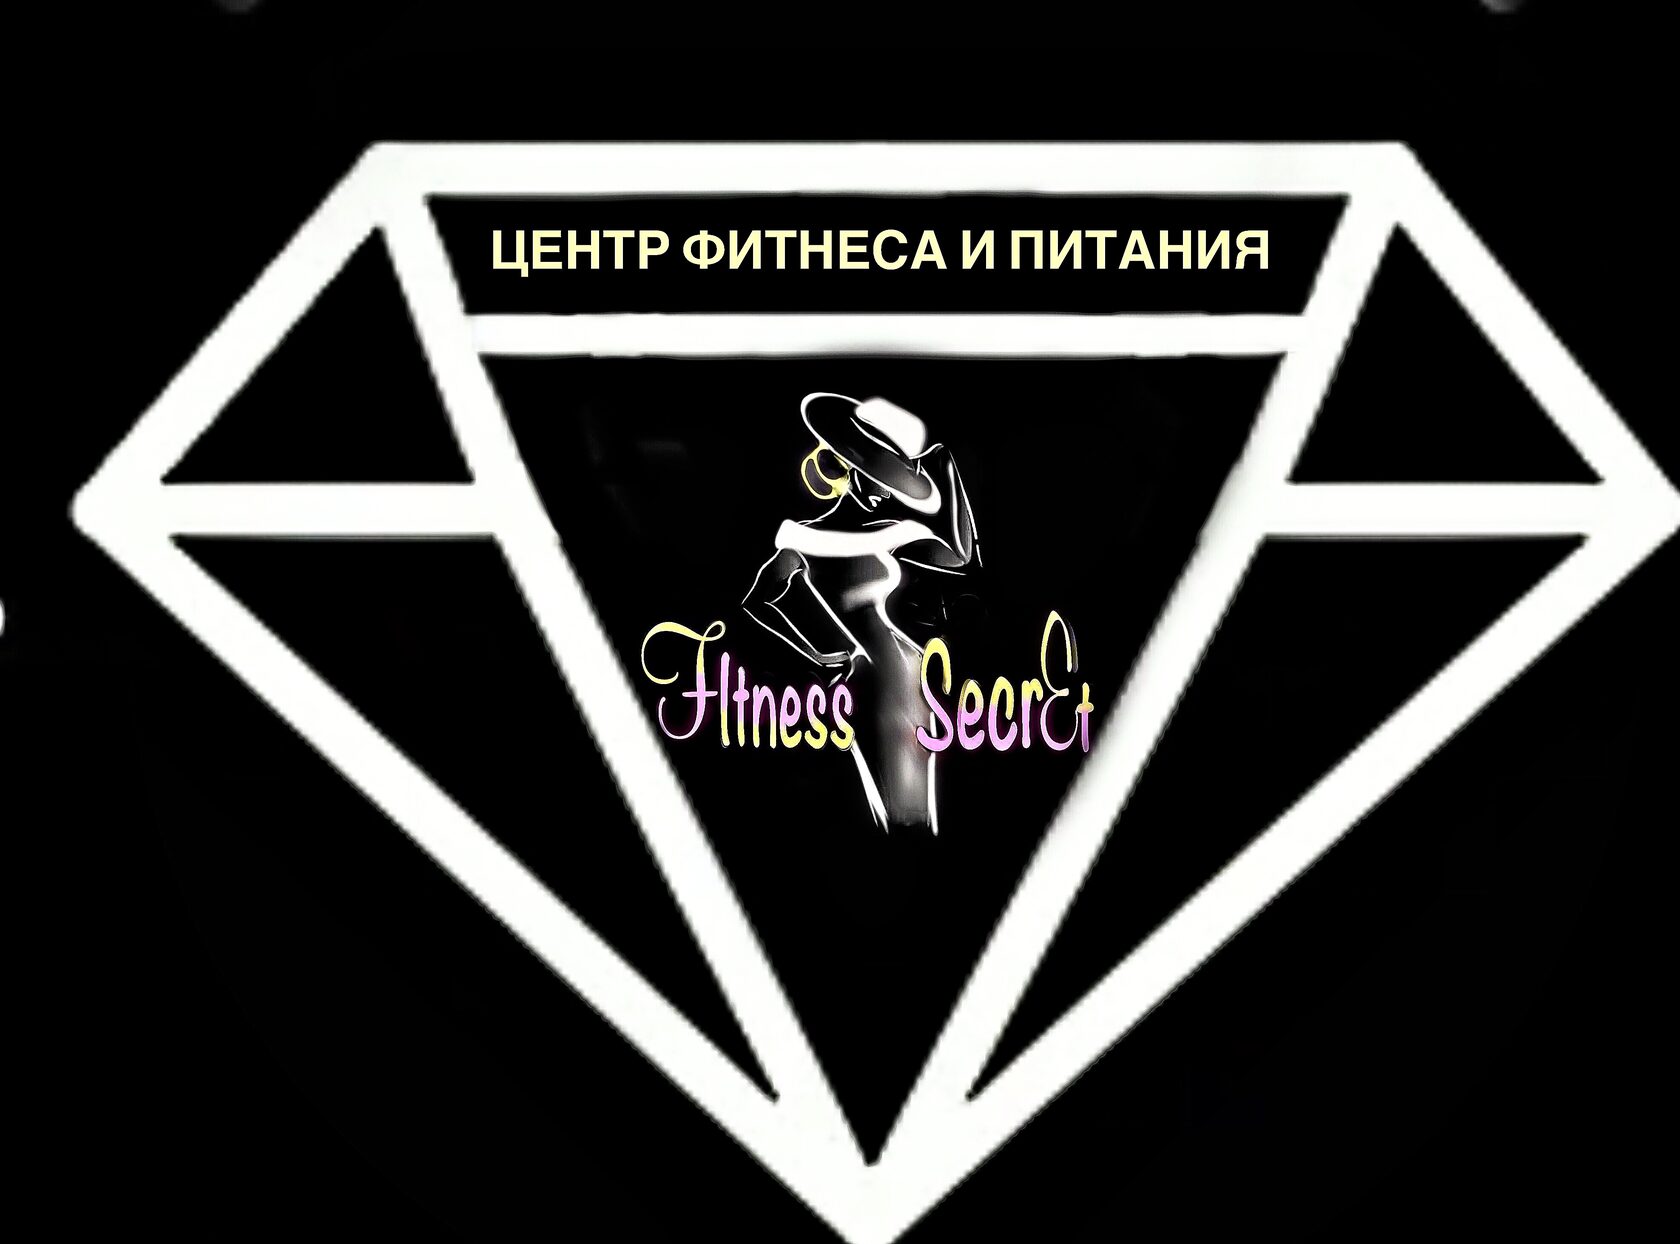 Центр фитнеса и питания «Fitness Secret